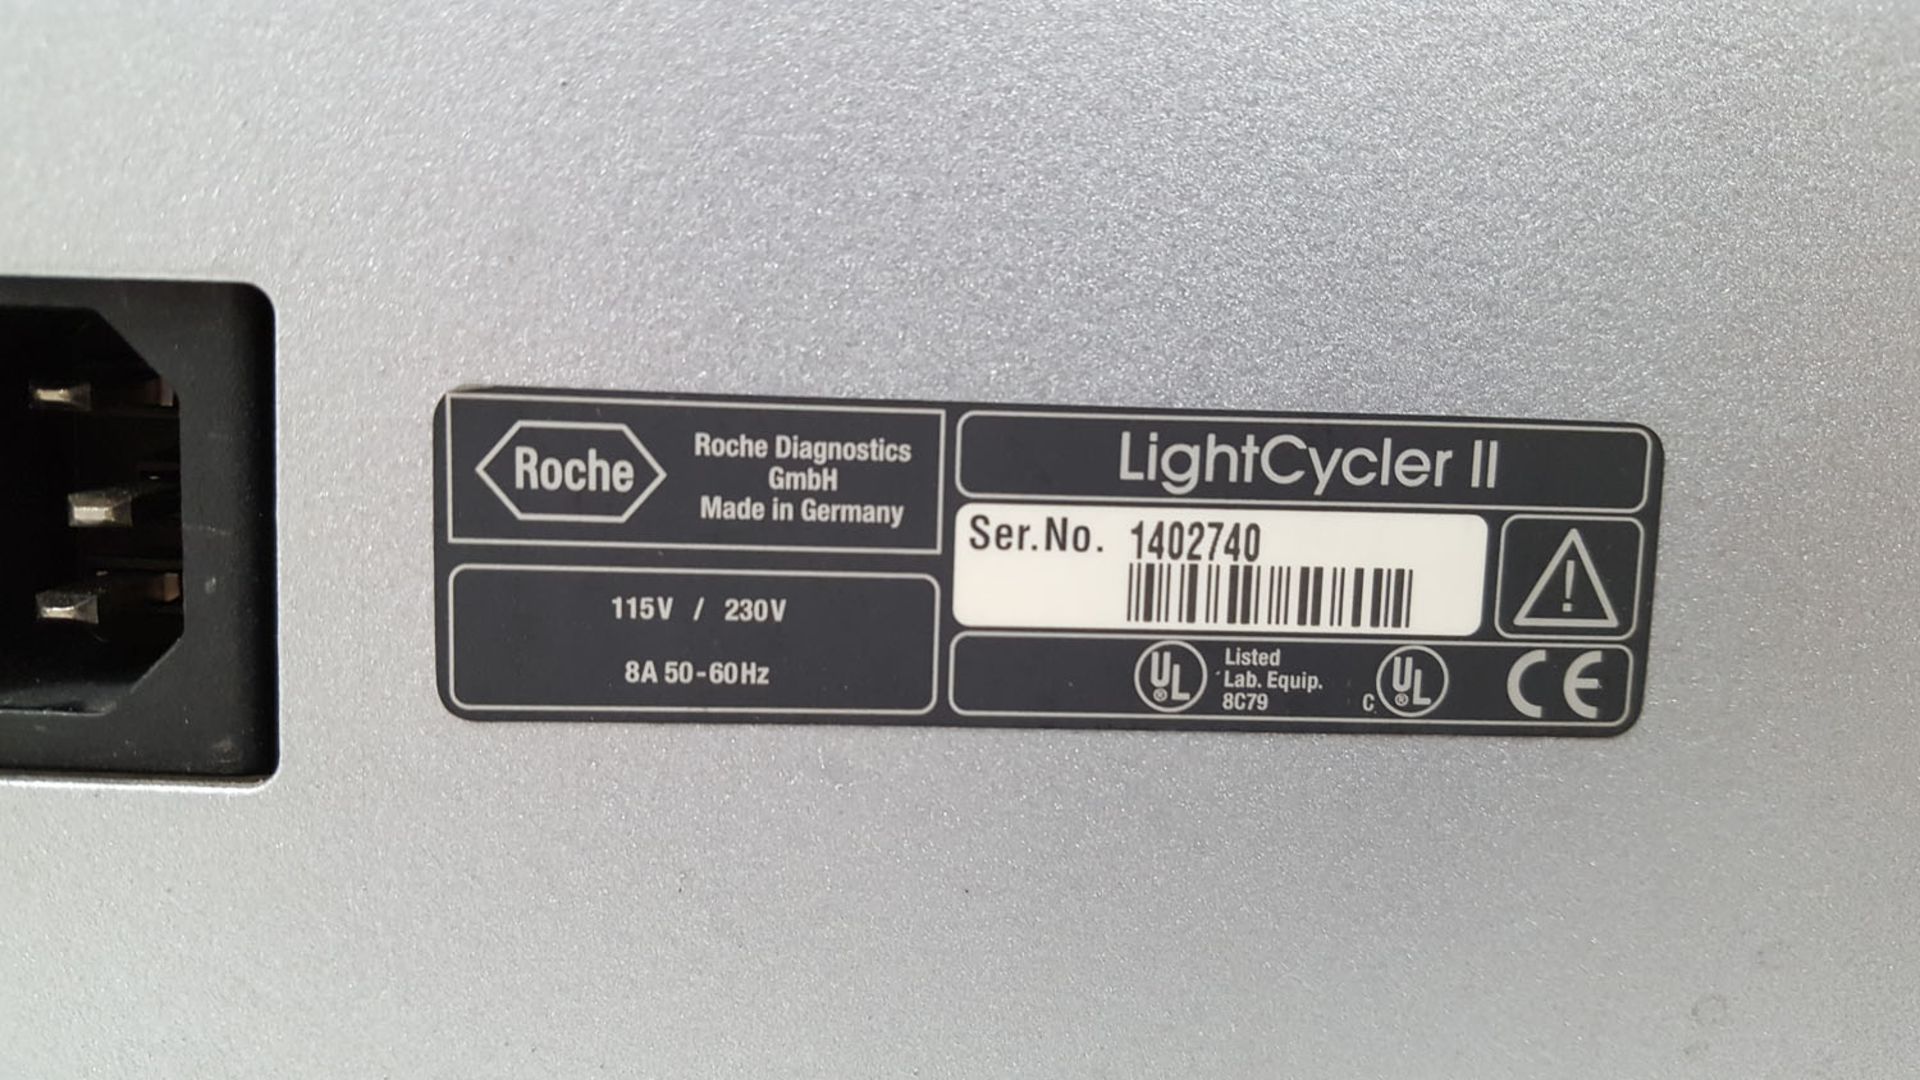 Roche LightCycler II, S/N 1402740 PCR Machine - Image 5 of 6